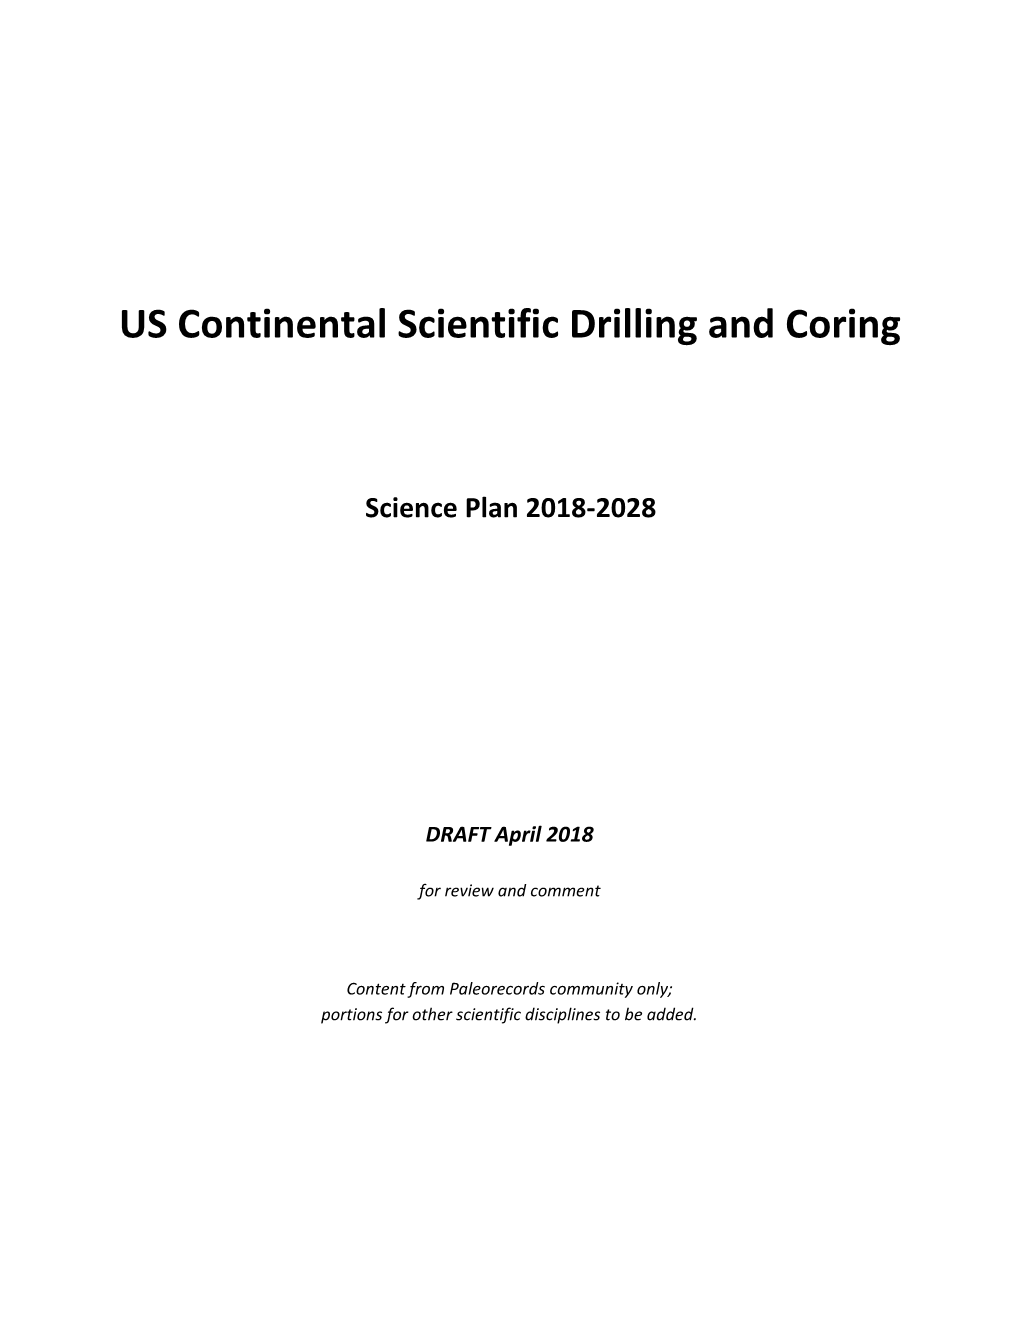 US Continental Scientific Drilling Science Plan 2018-2028